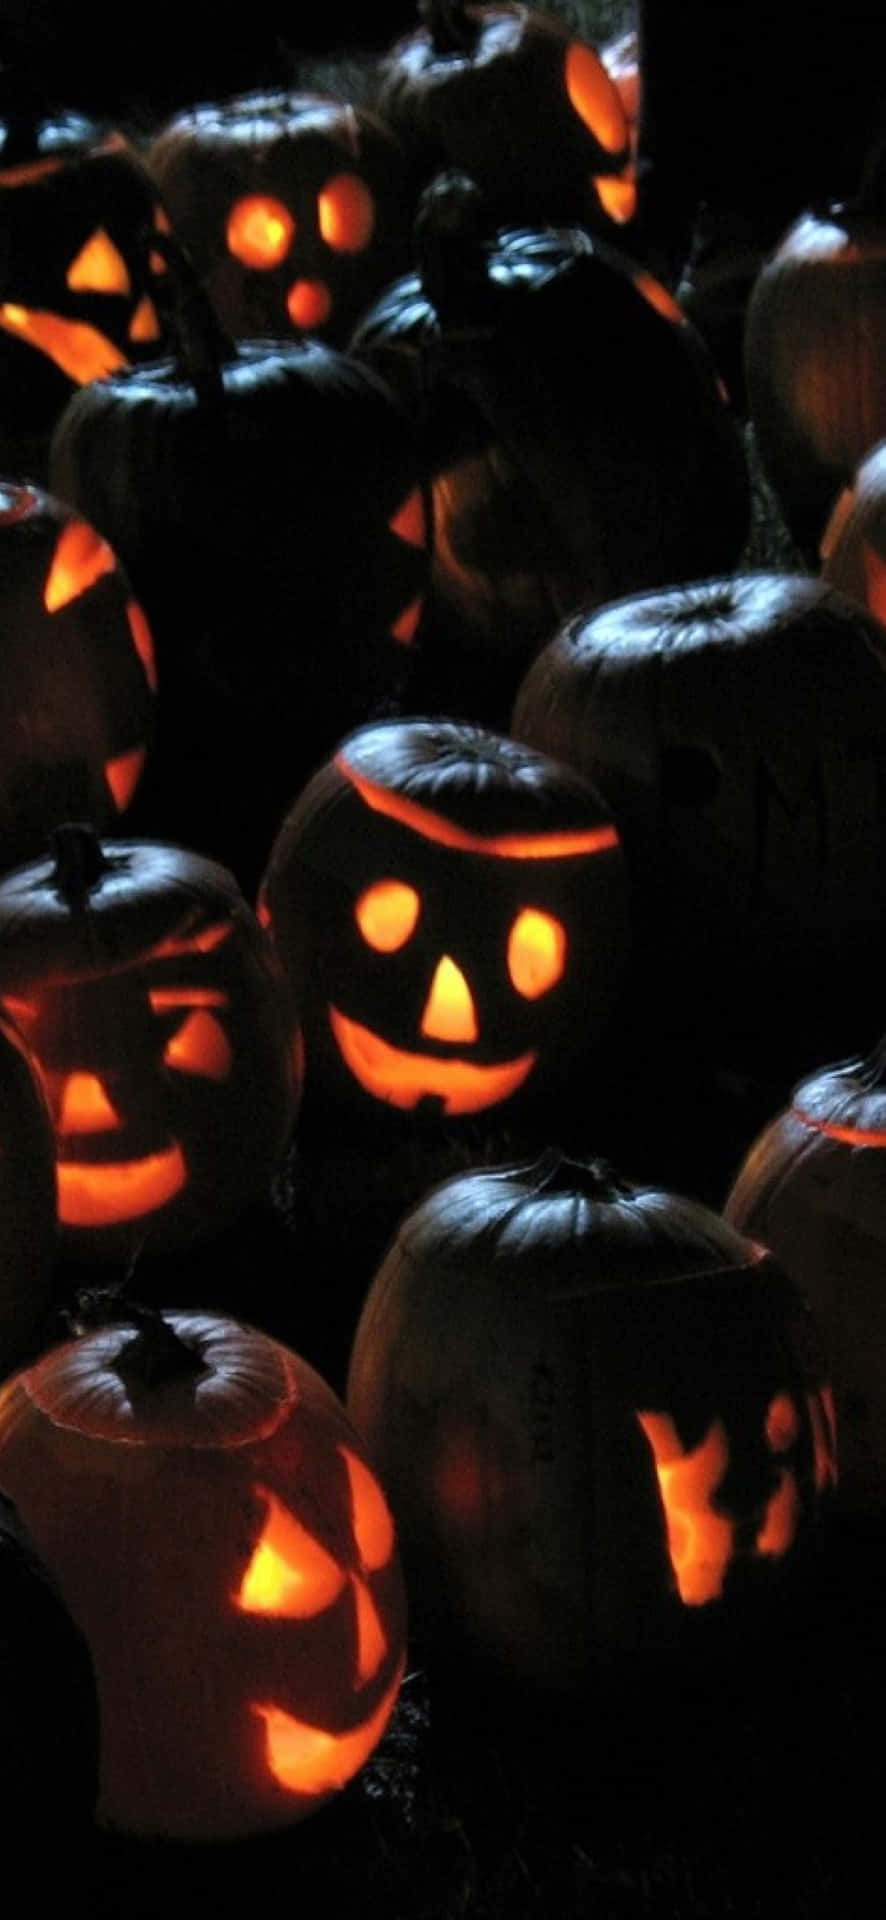 "A spooky night for a creepy Halloween" Wallpaper